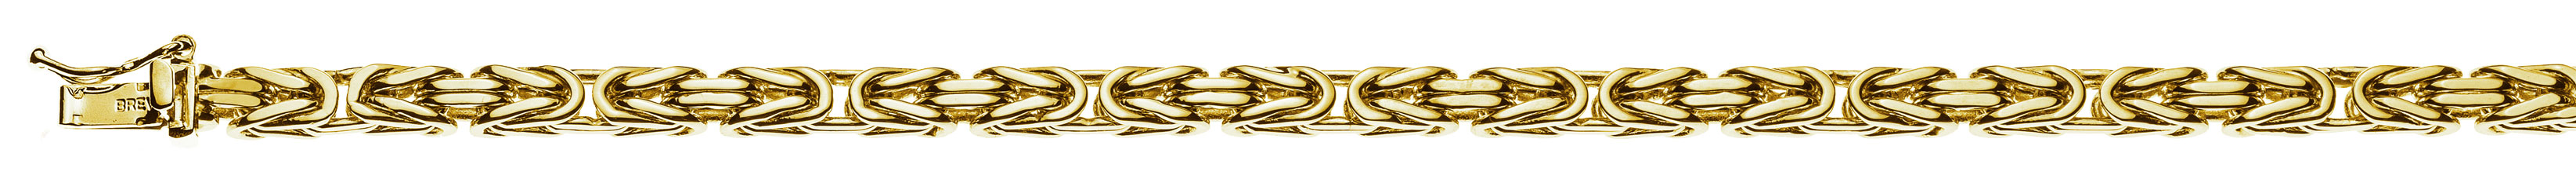 AURONOS Prestige Armband 18k Gelbgold Königskette 4mm 22cm 